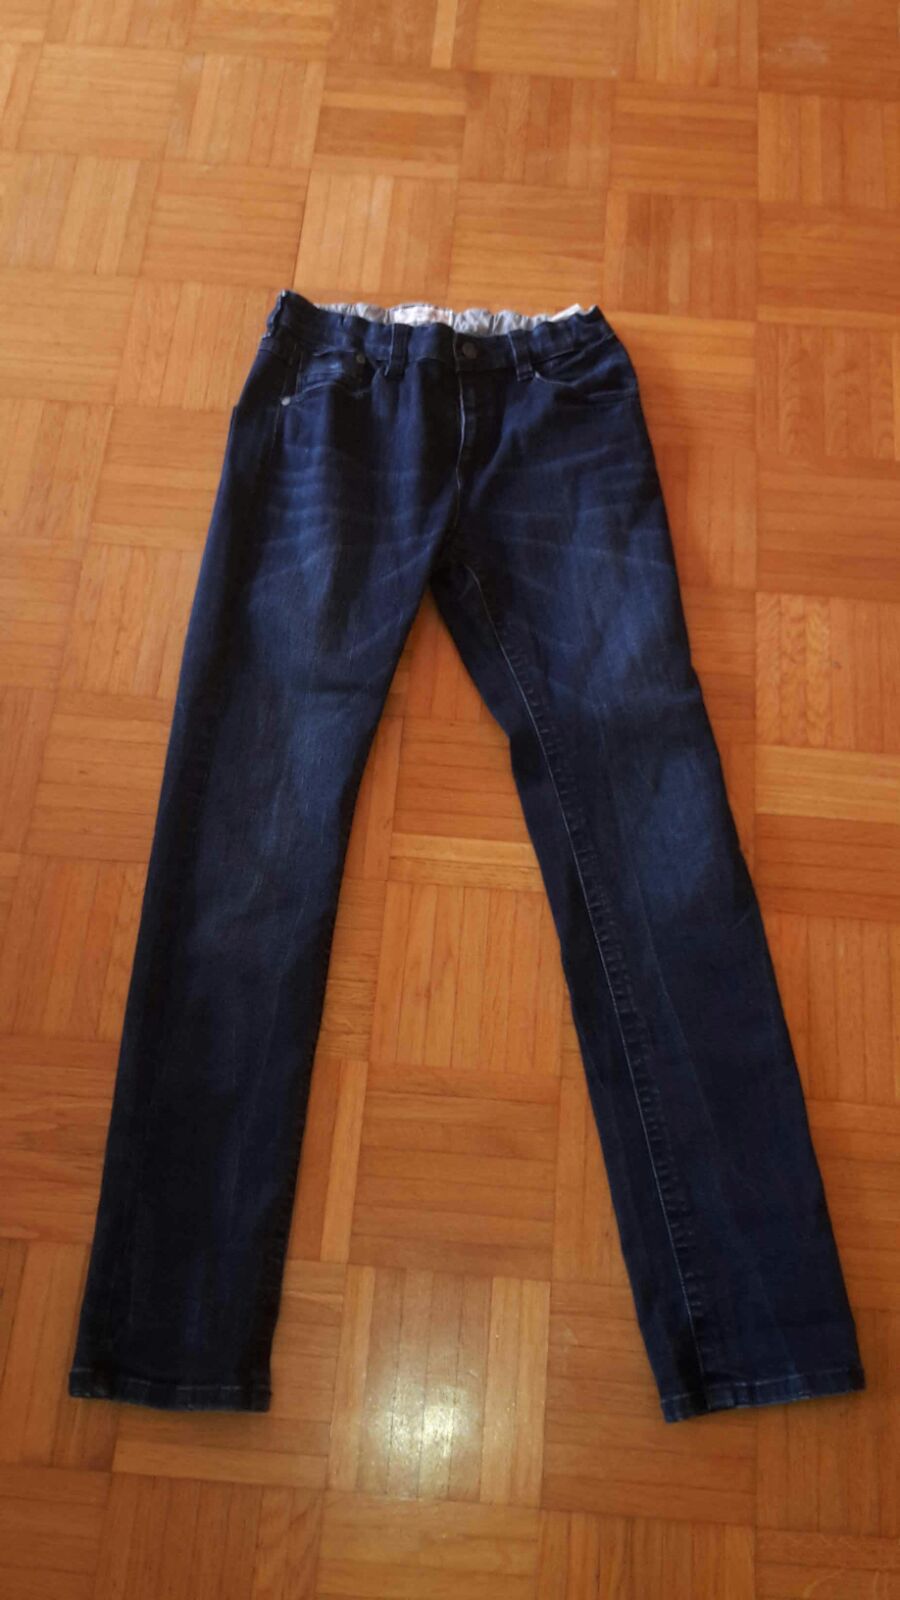 Jeans2.jpg